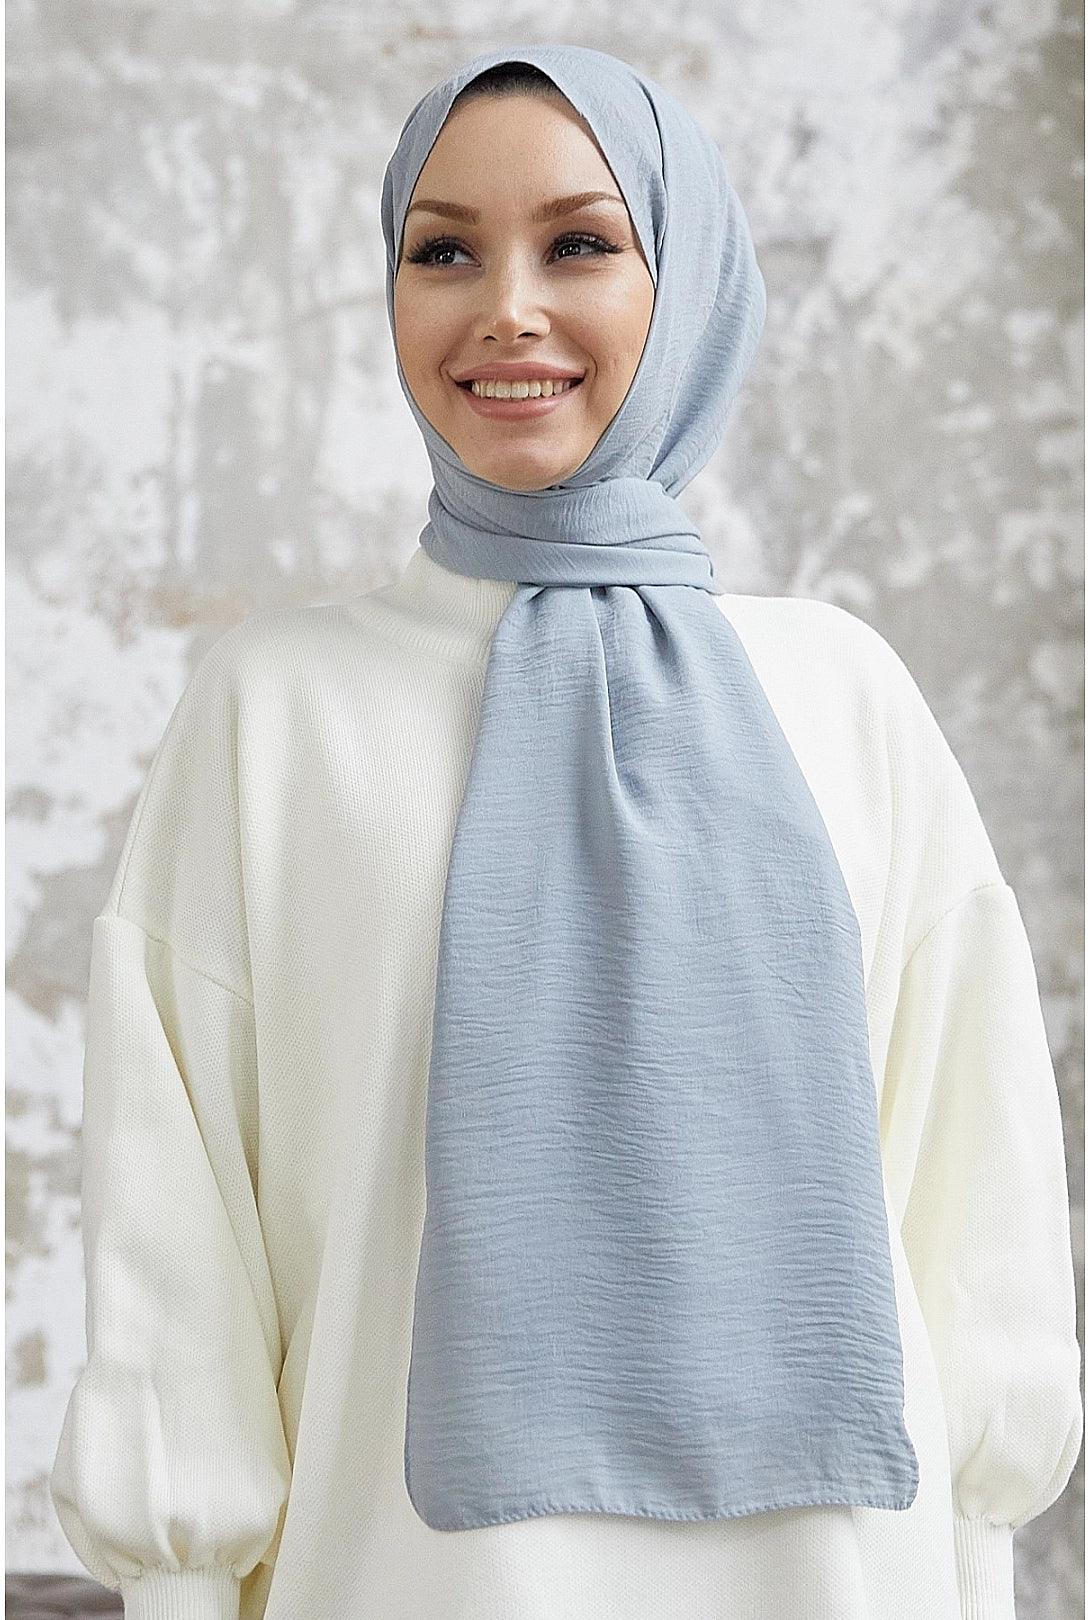 Jazz Modest Hijab Shawl - Bluish Gray